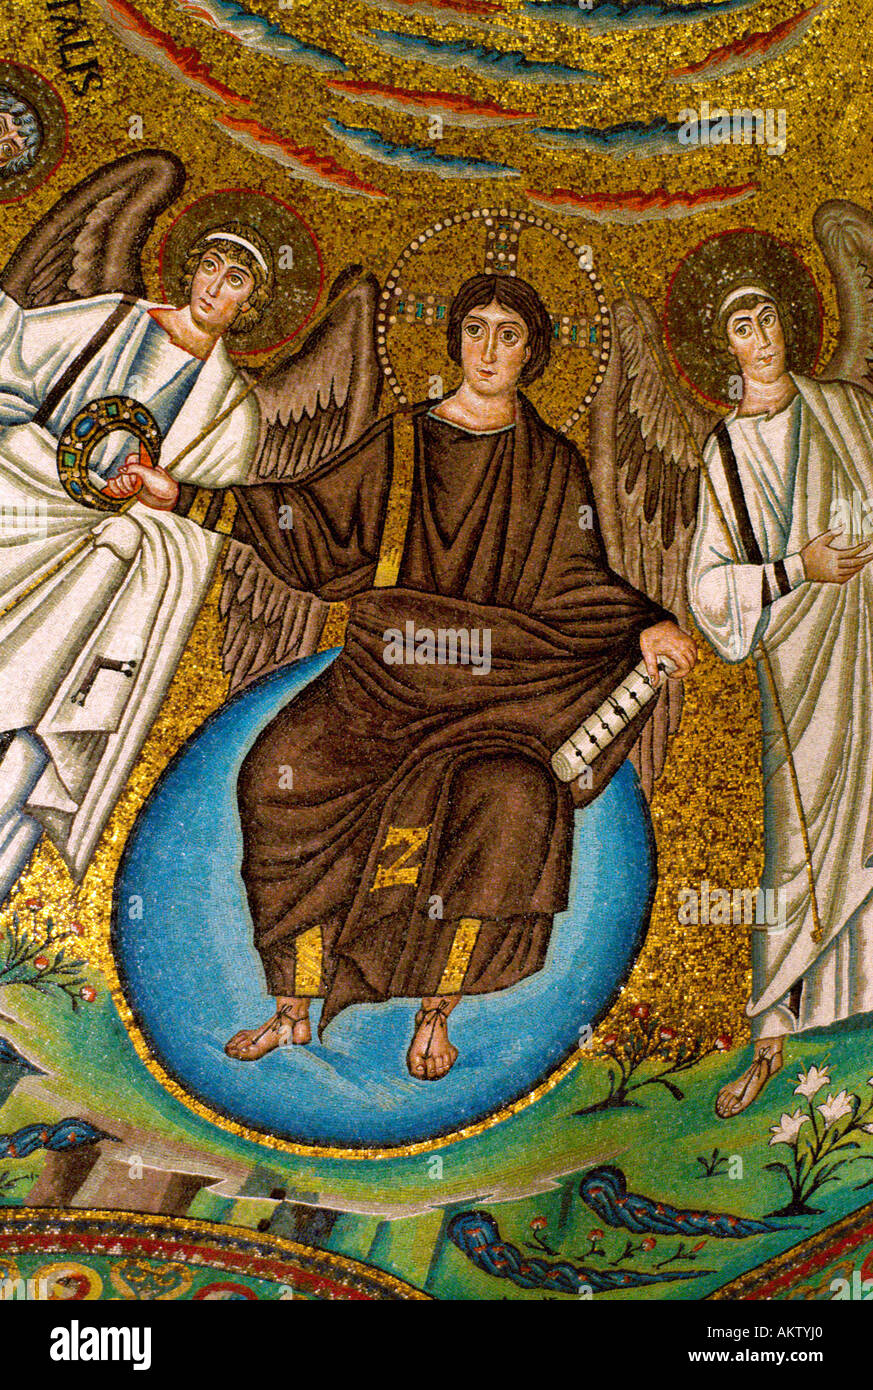 Ravenna Italy 6th C AD mosaic depicting Christ as creator of the cosmos Basilica di San Vitale Stock Photo